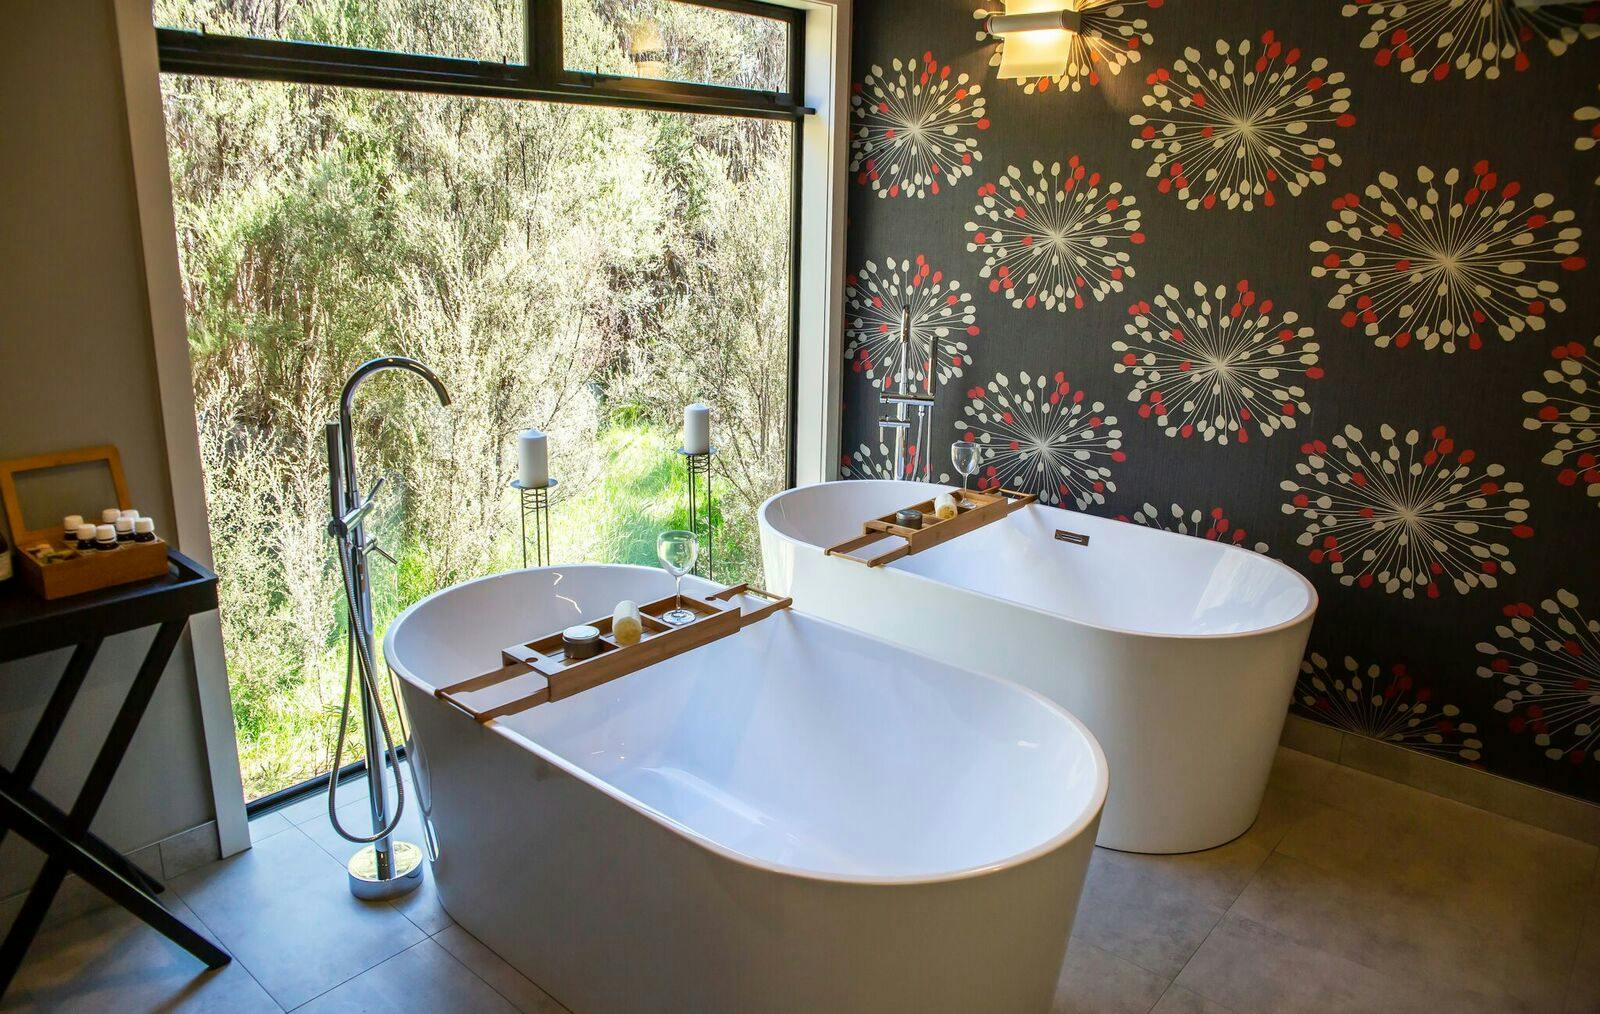 Twin baths with bush view